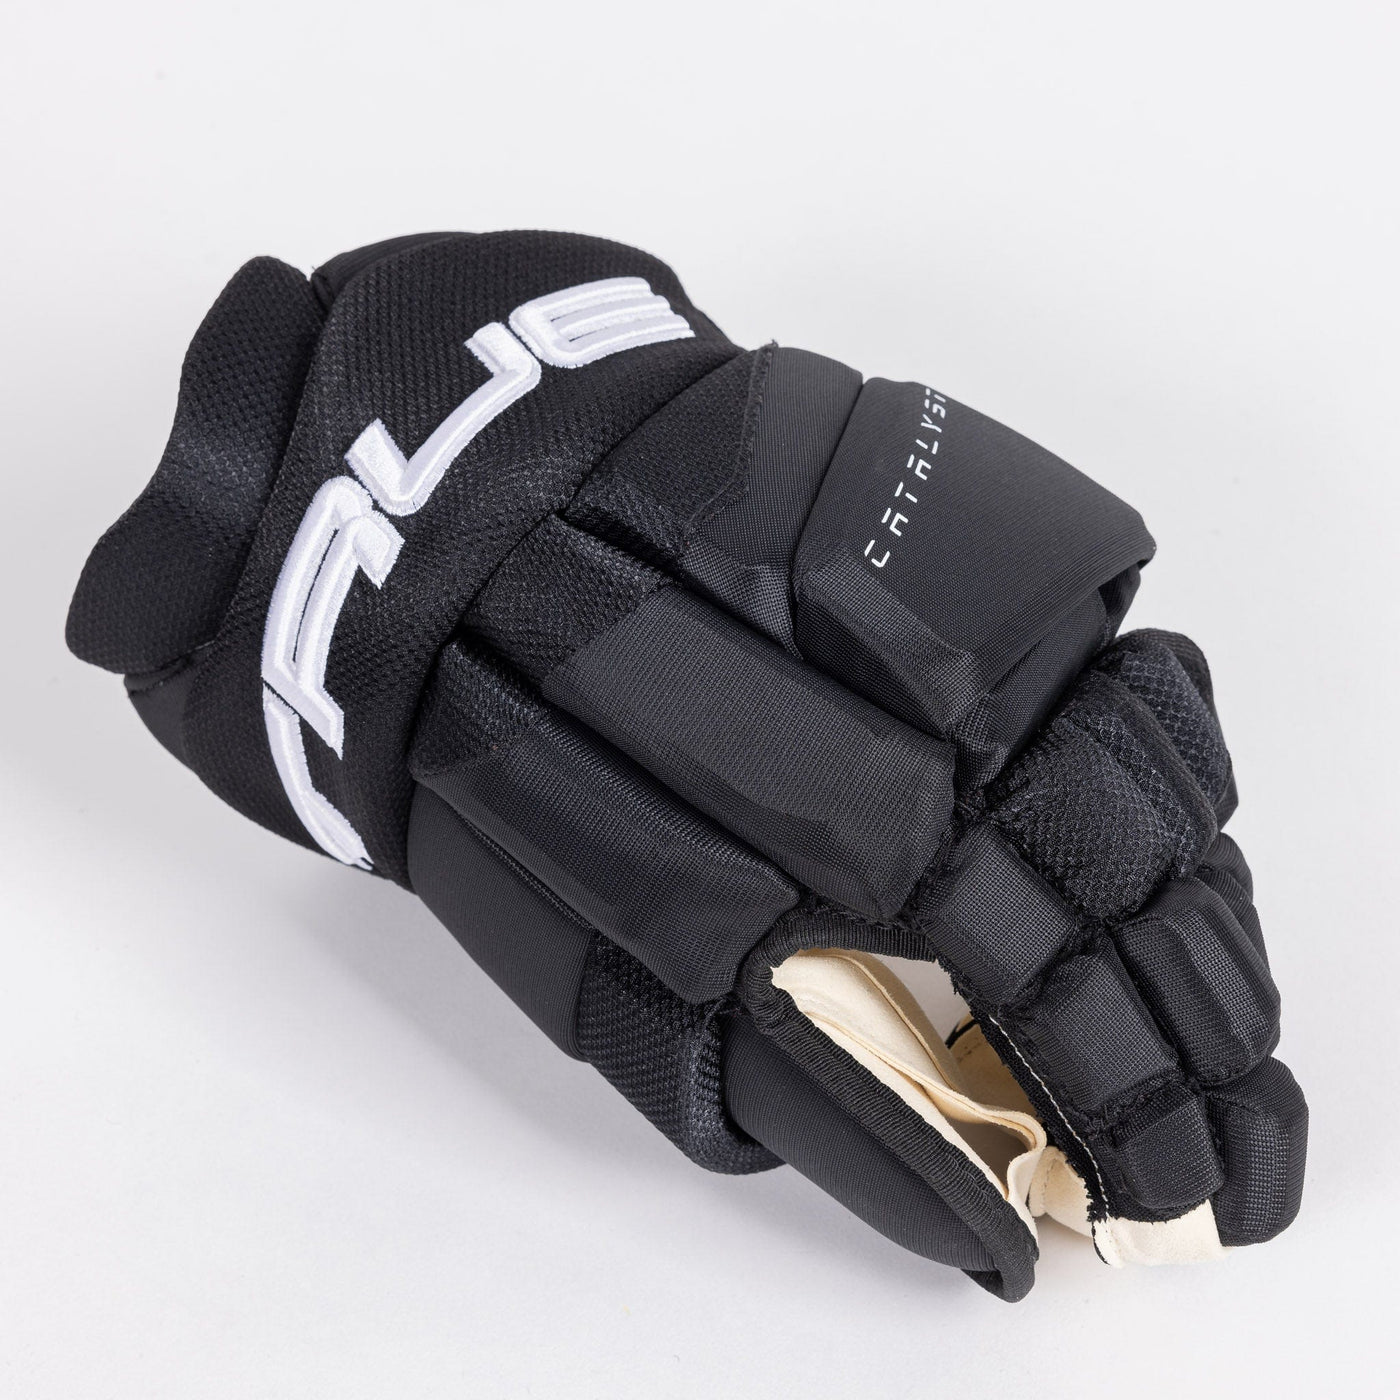 TRUE Catalyst Pro Stock Senior Hockey Glove - Columbus Blue Jackets - The Hockey Shop Source For Sports